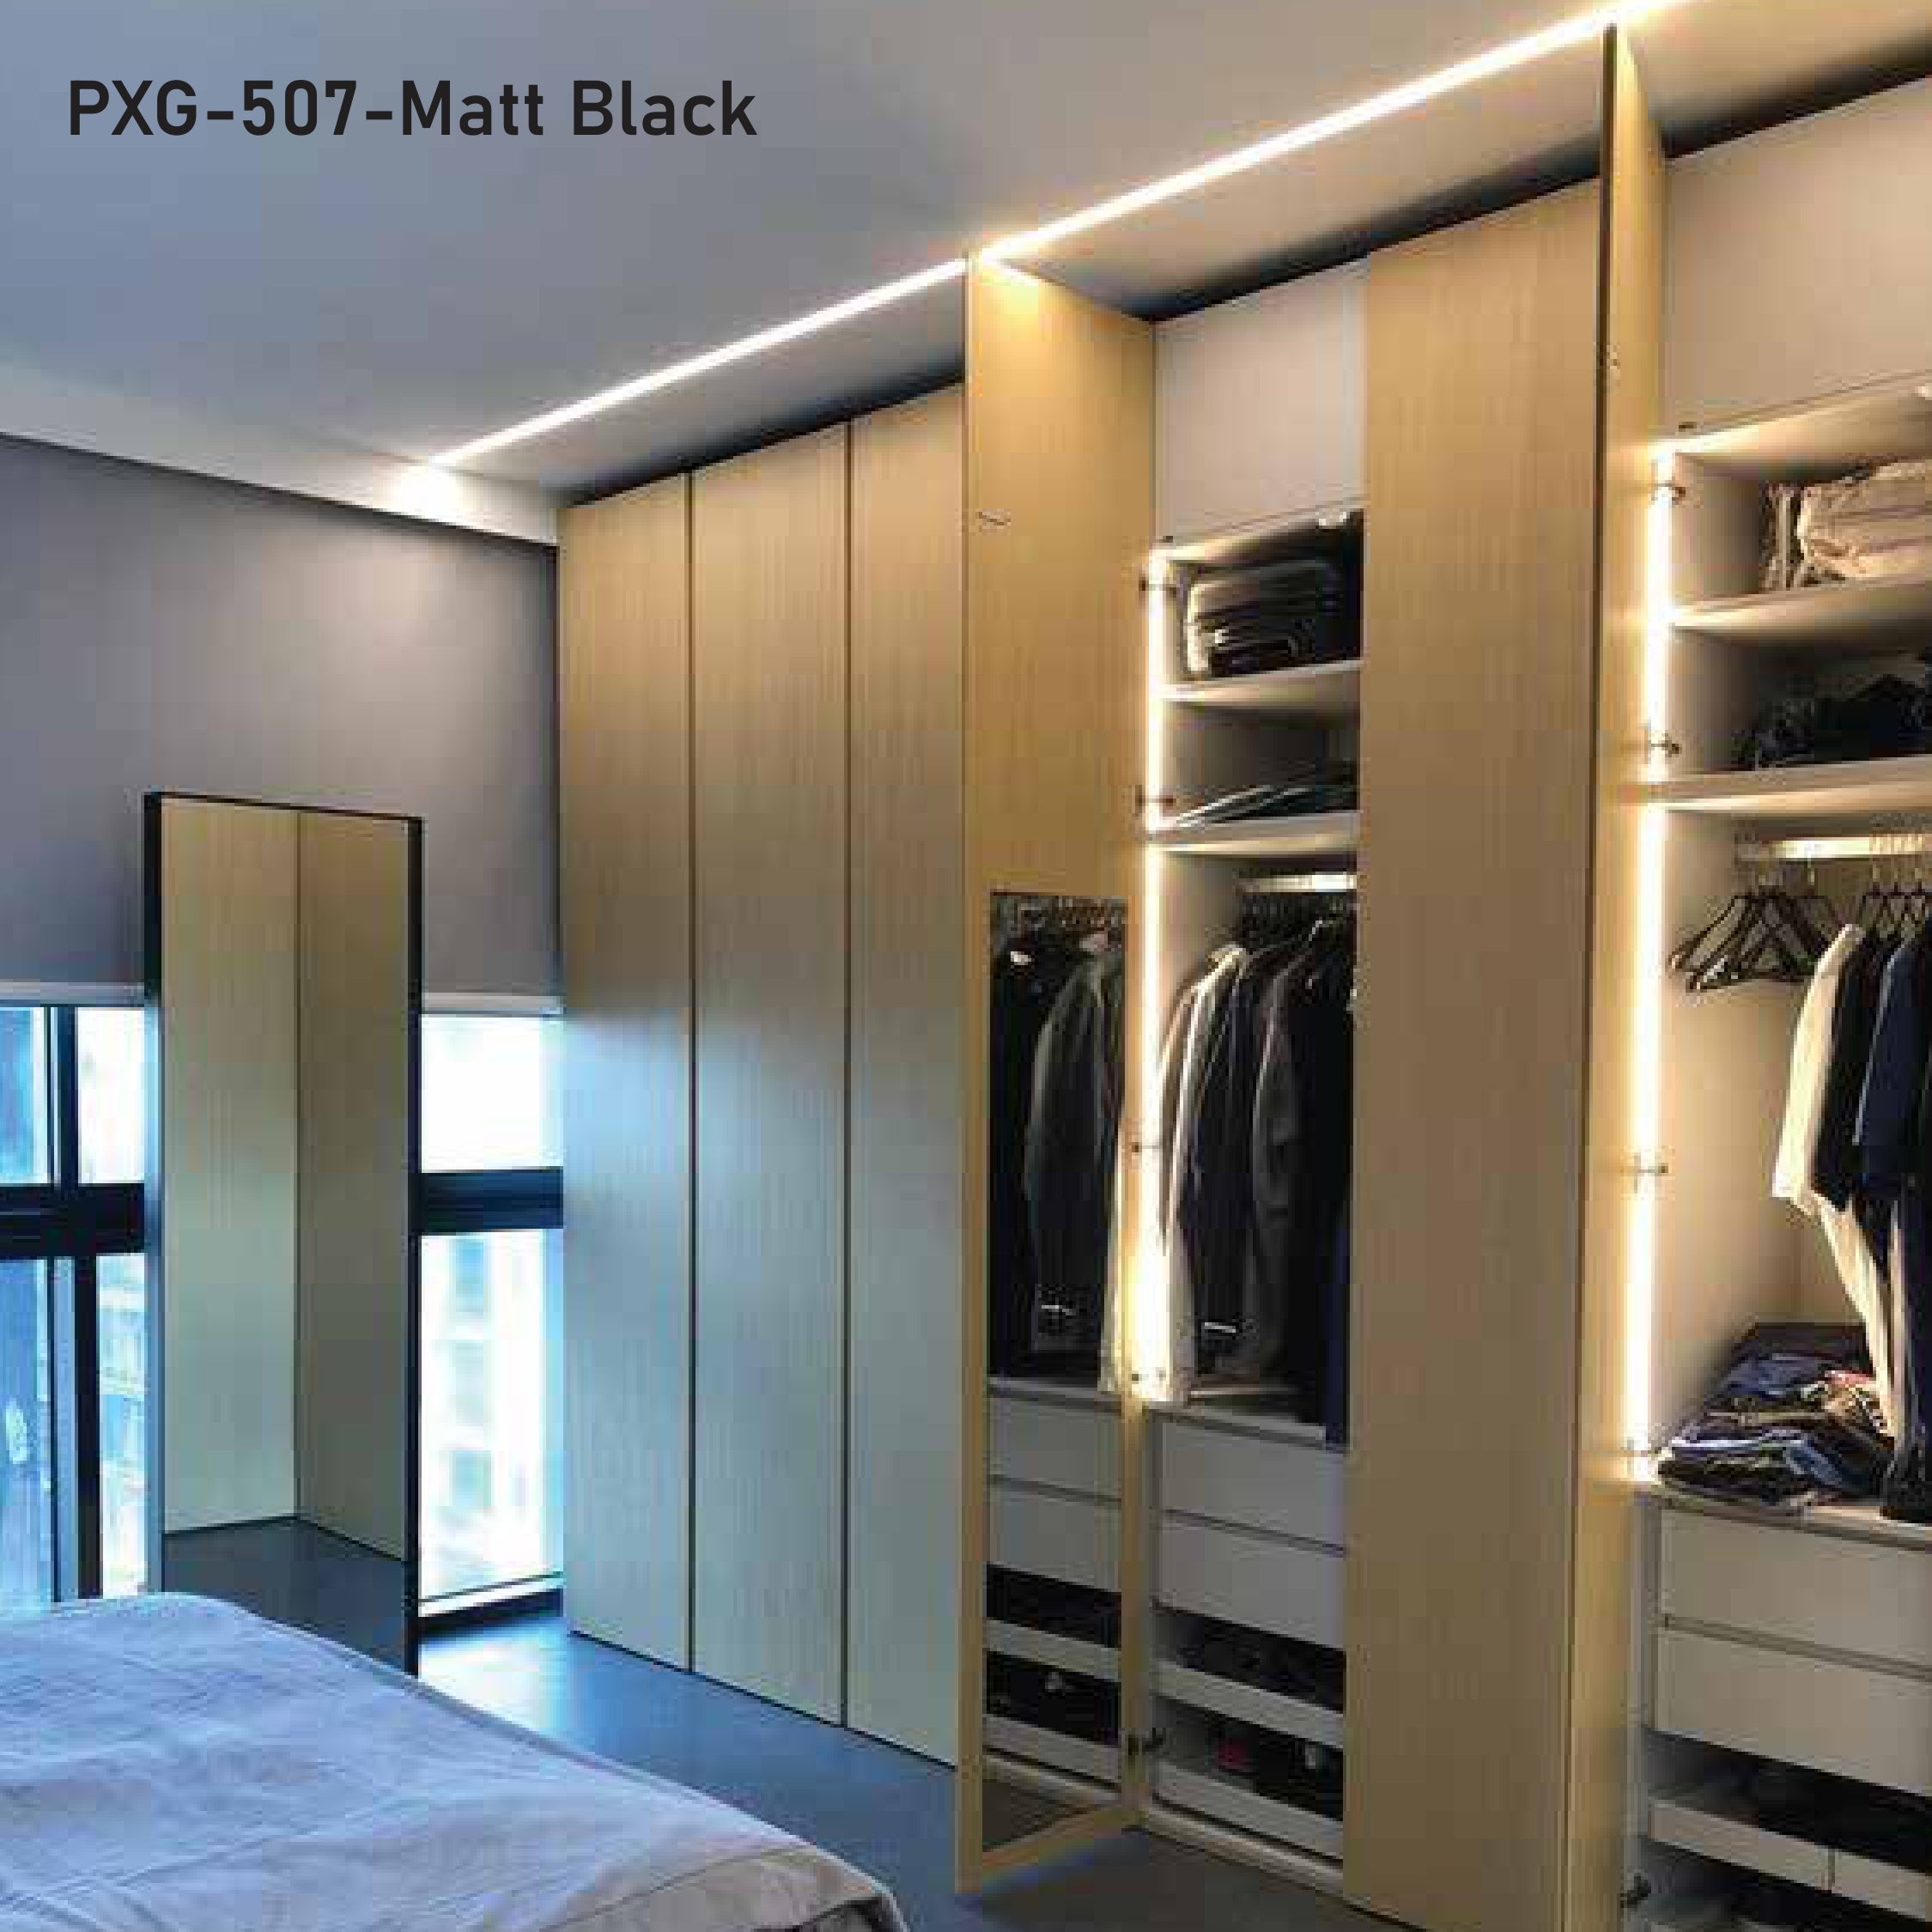 Aluminium Profile Light | PXG-507-MATT BLACK